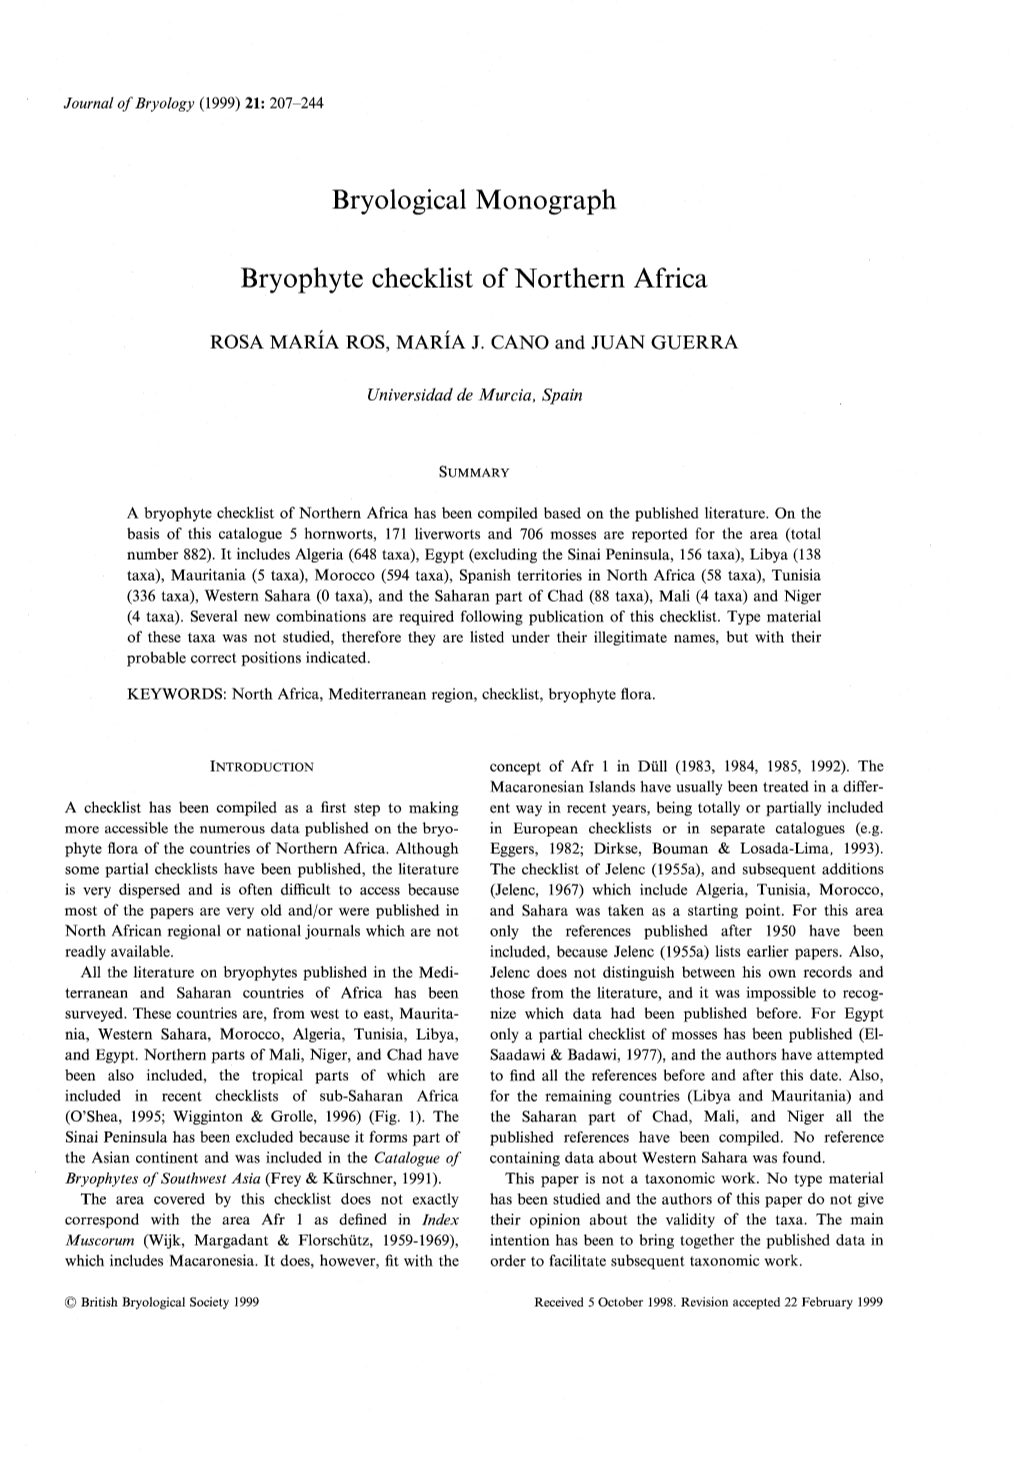 Bryologicalmonograph Bryophyte Checklist of Northern Africa